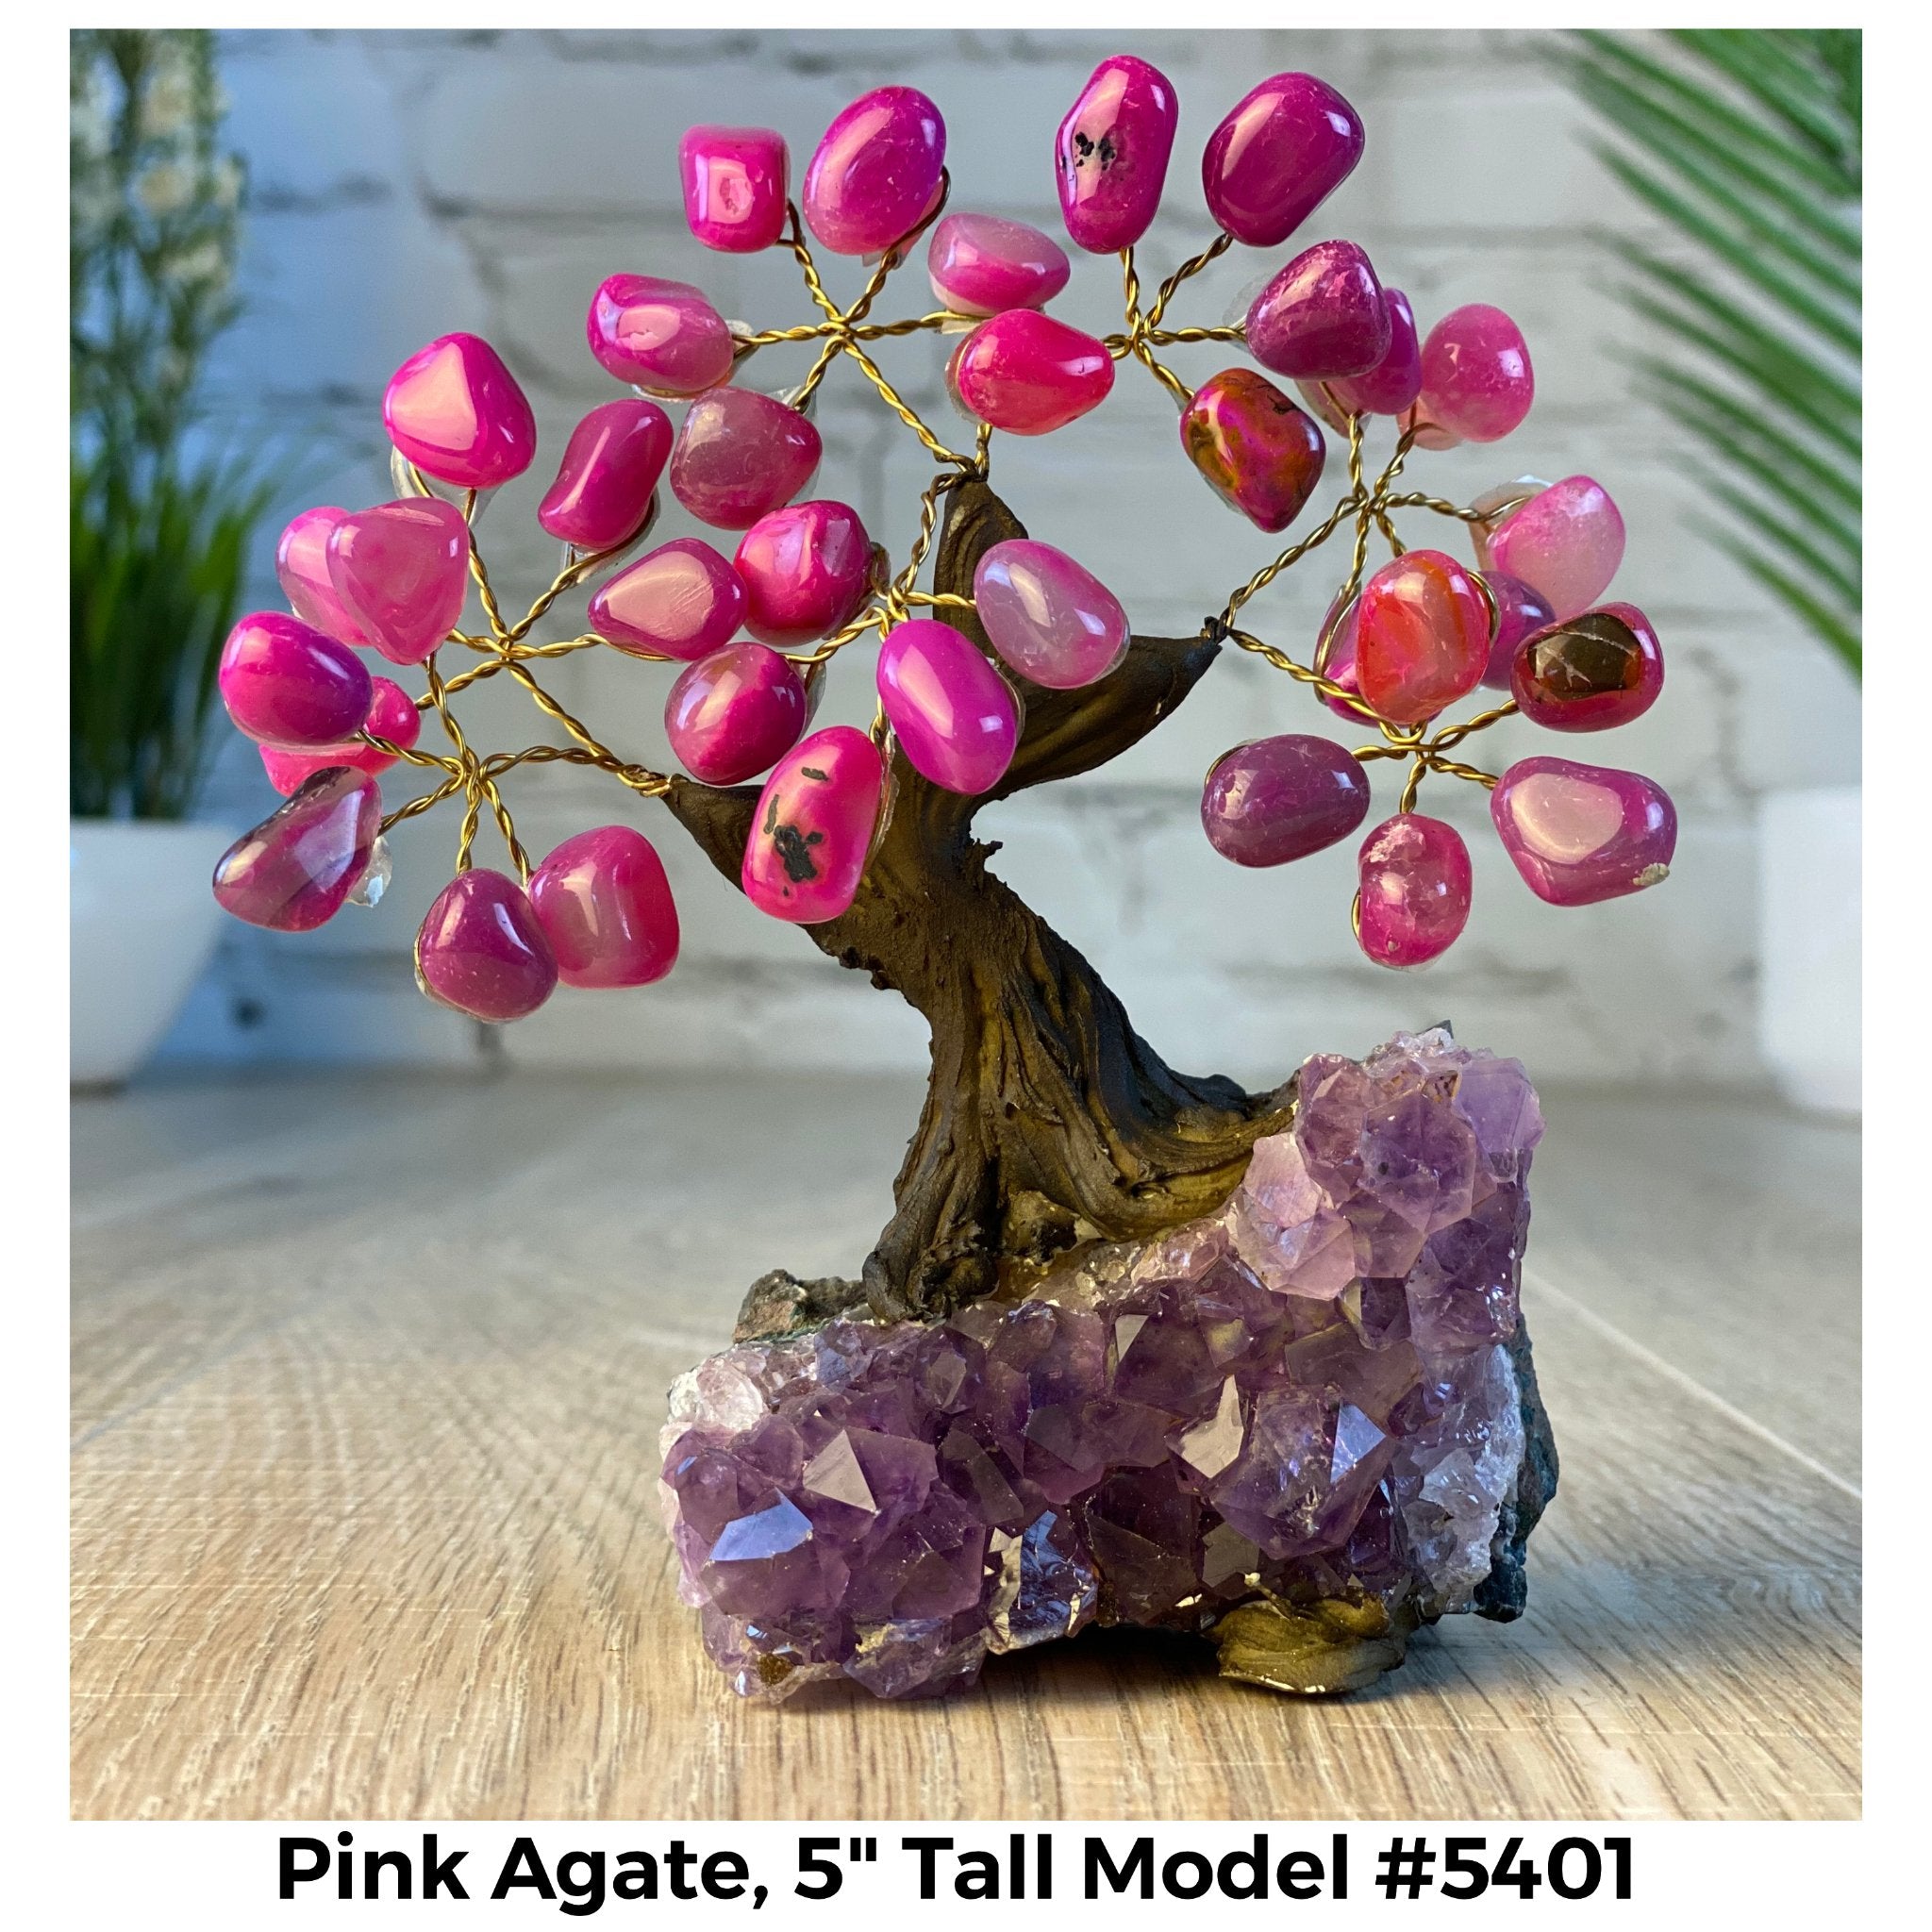 Pink Agate 5" Tall Handmade Gemstone Tree on a Crystal base, 35 Gems #5401PNKA - Brazil GemsBrazil GemsPink Agate 5" Tall Handmade Gemstone Tree on a Crystal base, 35 Gems #5401PNKAGemstone Trees5401PNKA